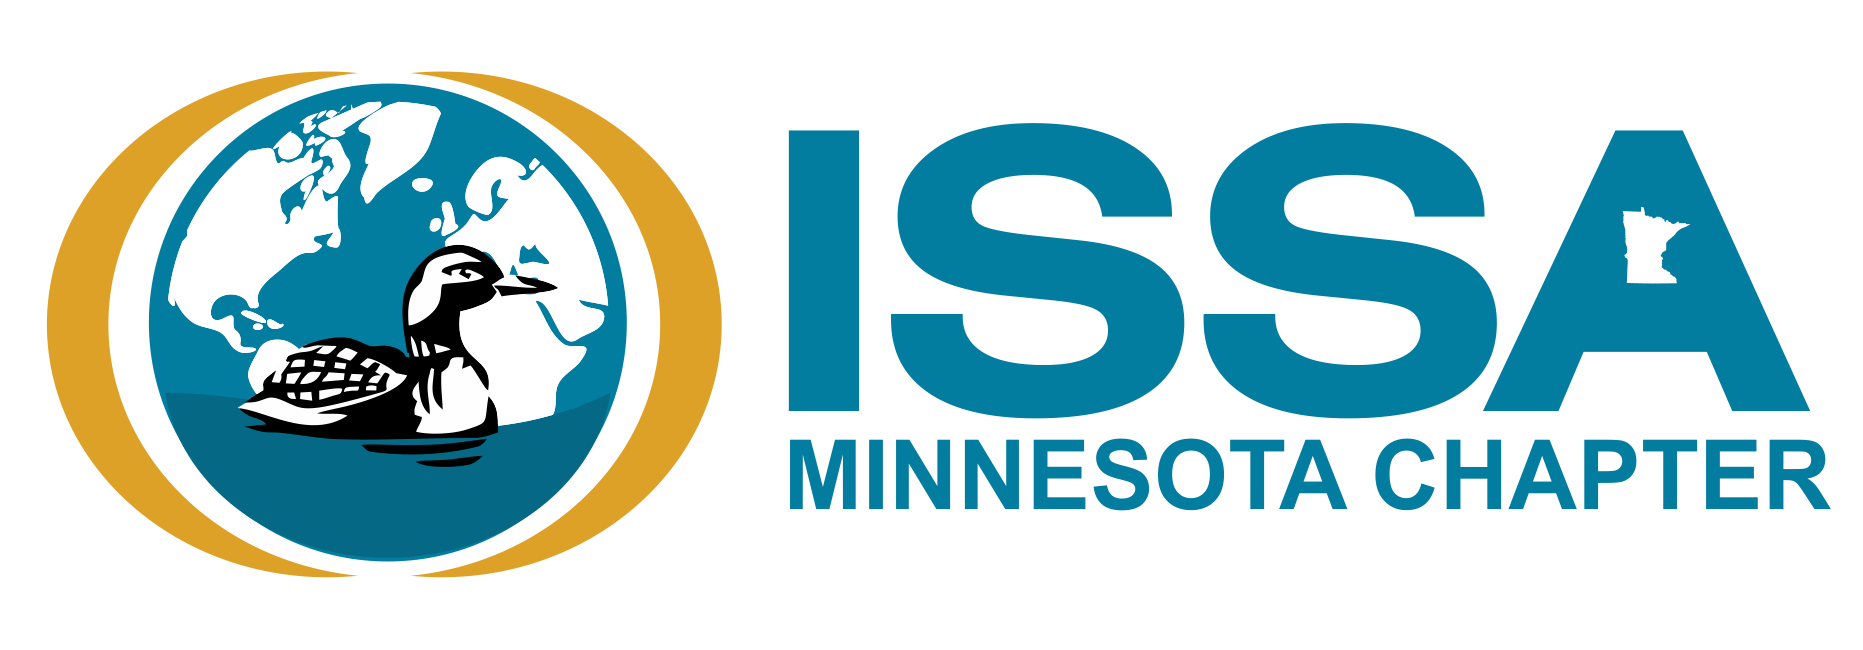 Issa Logo - Home